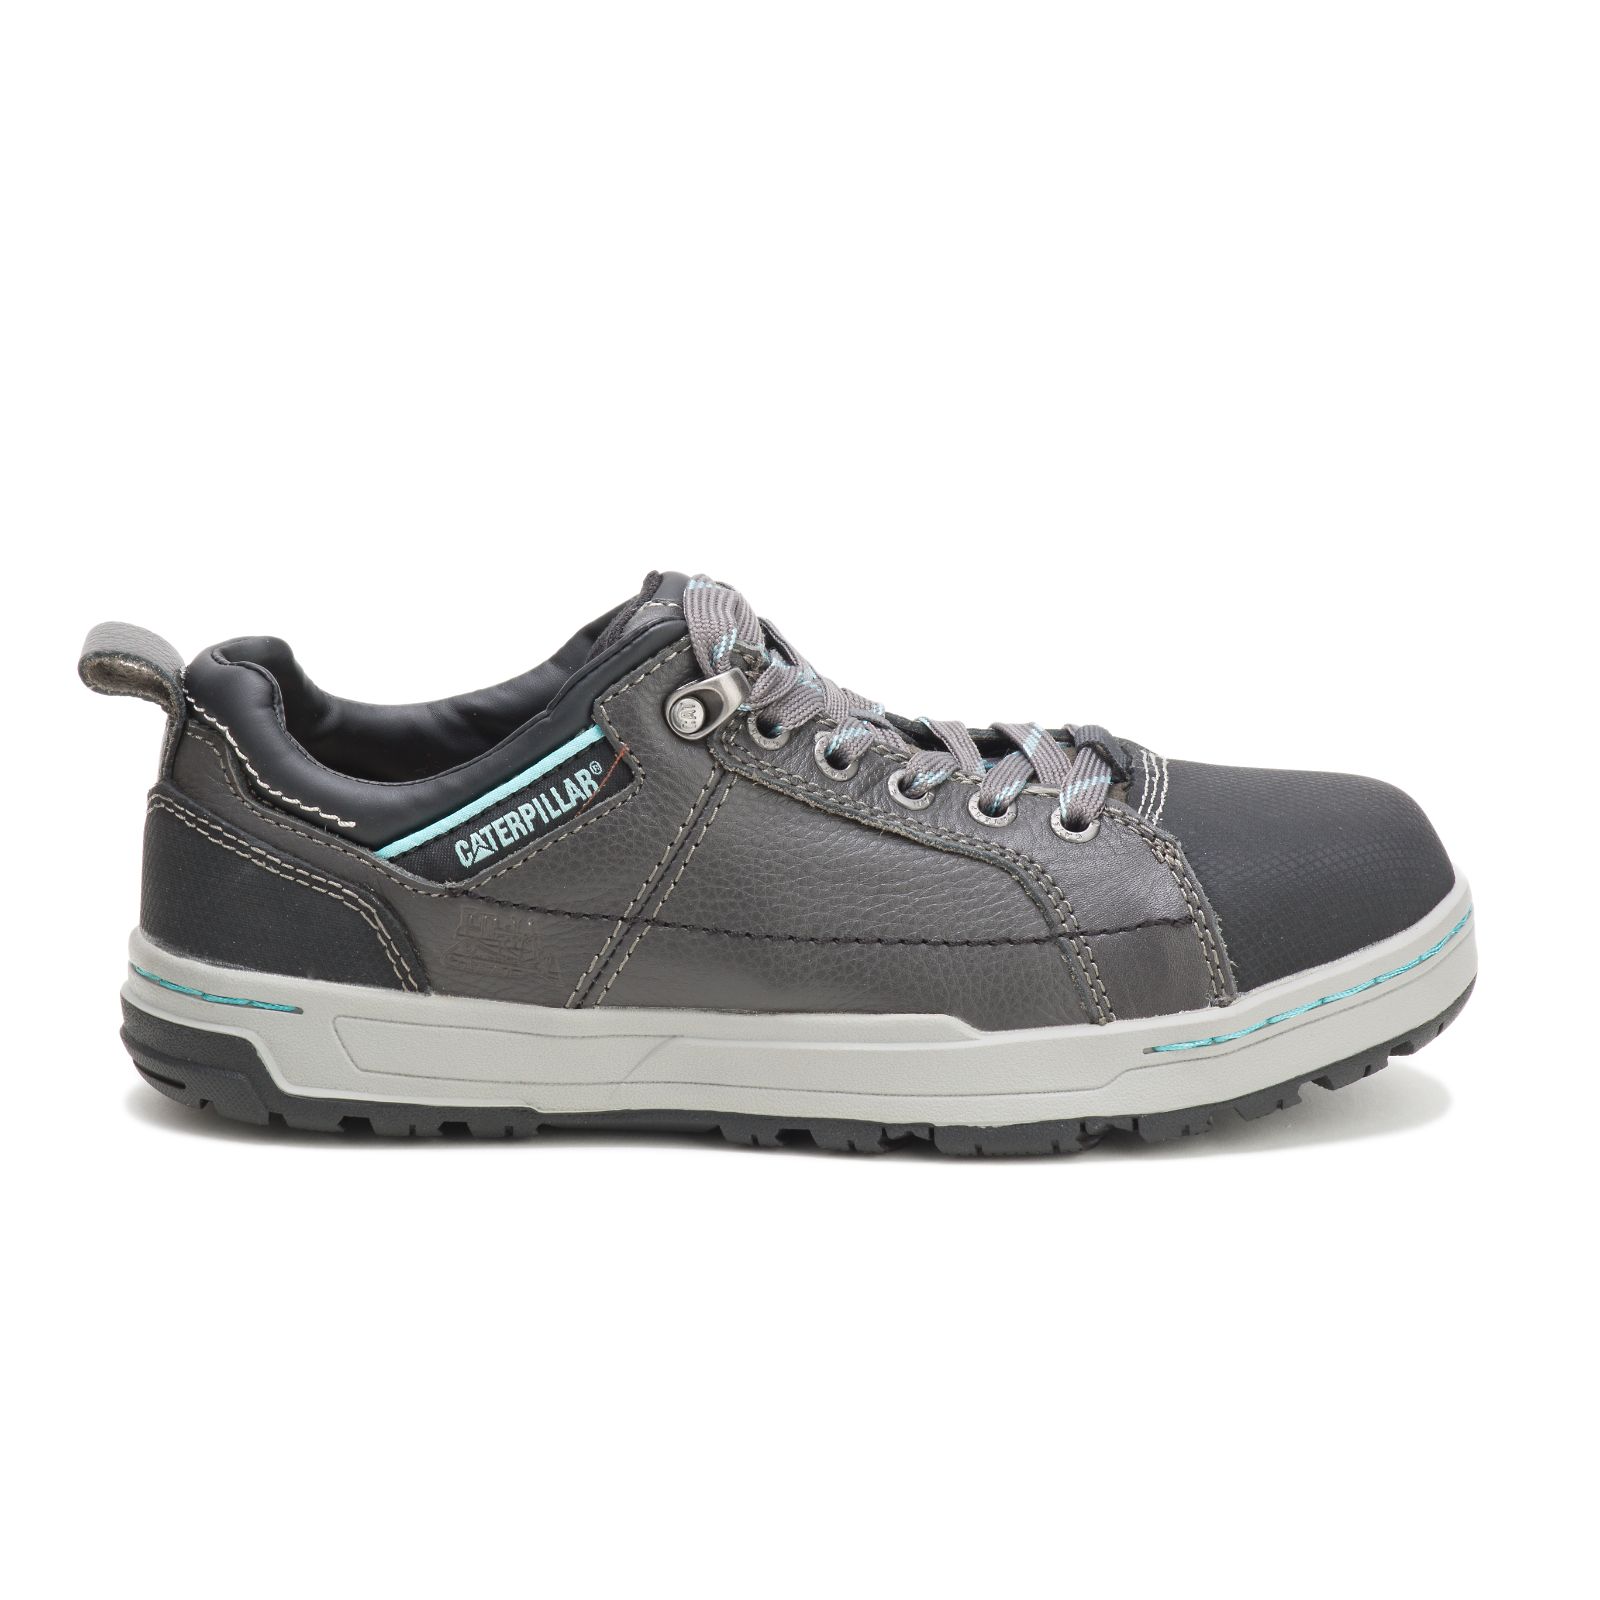 Caterpillar Brode Steel Toe Philippines - Womens Steel Toe Boots - Dark Grey/Mint 89532URXT